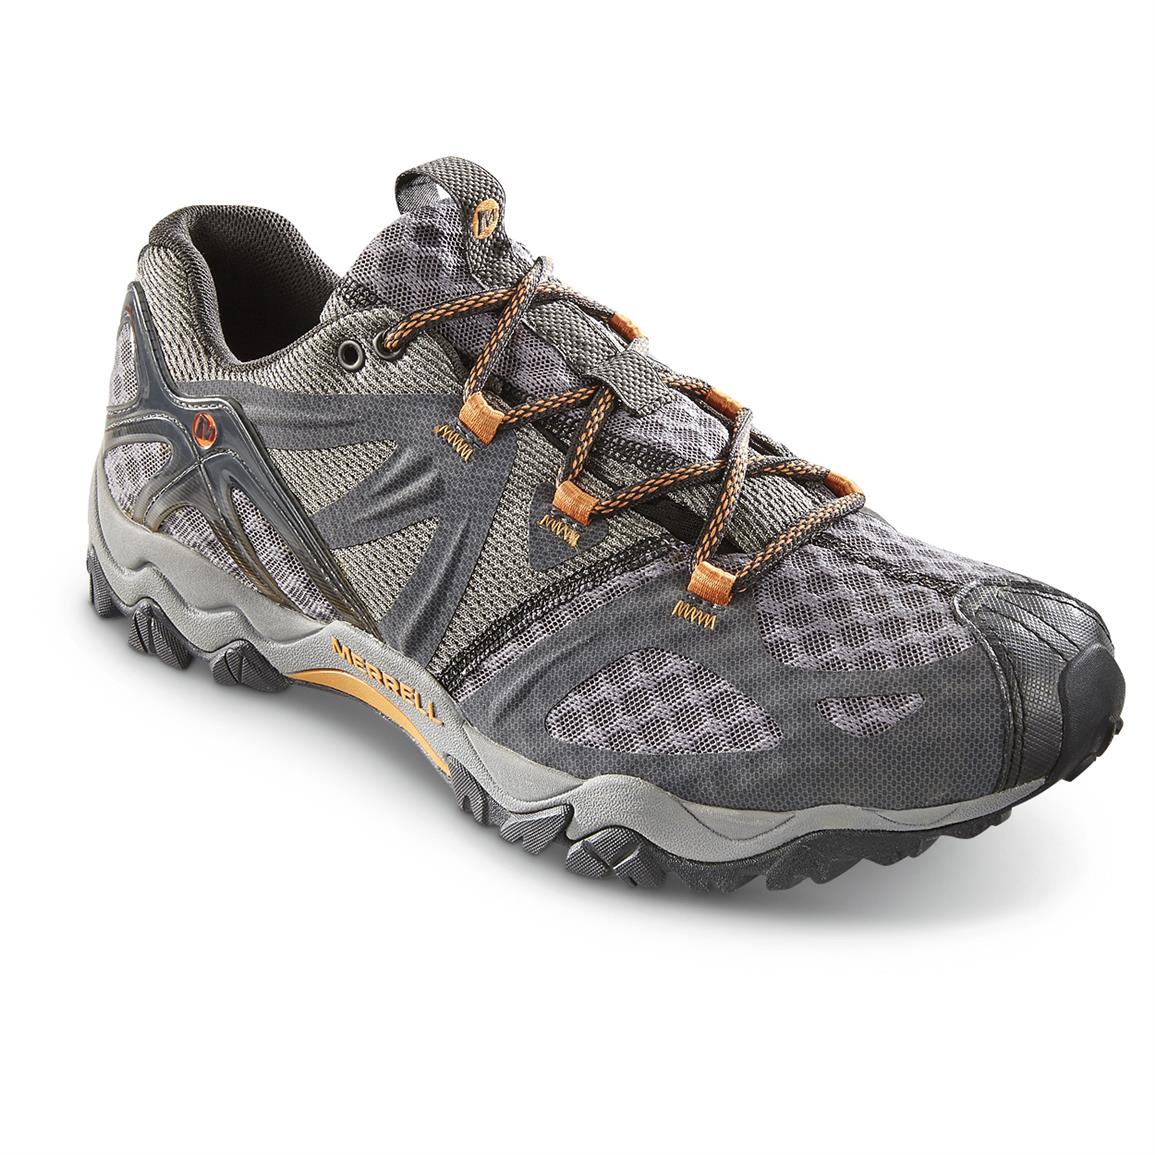 Merrell Men's Grassbow Air Hiking Shoes - 640112, Running Shoes ...